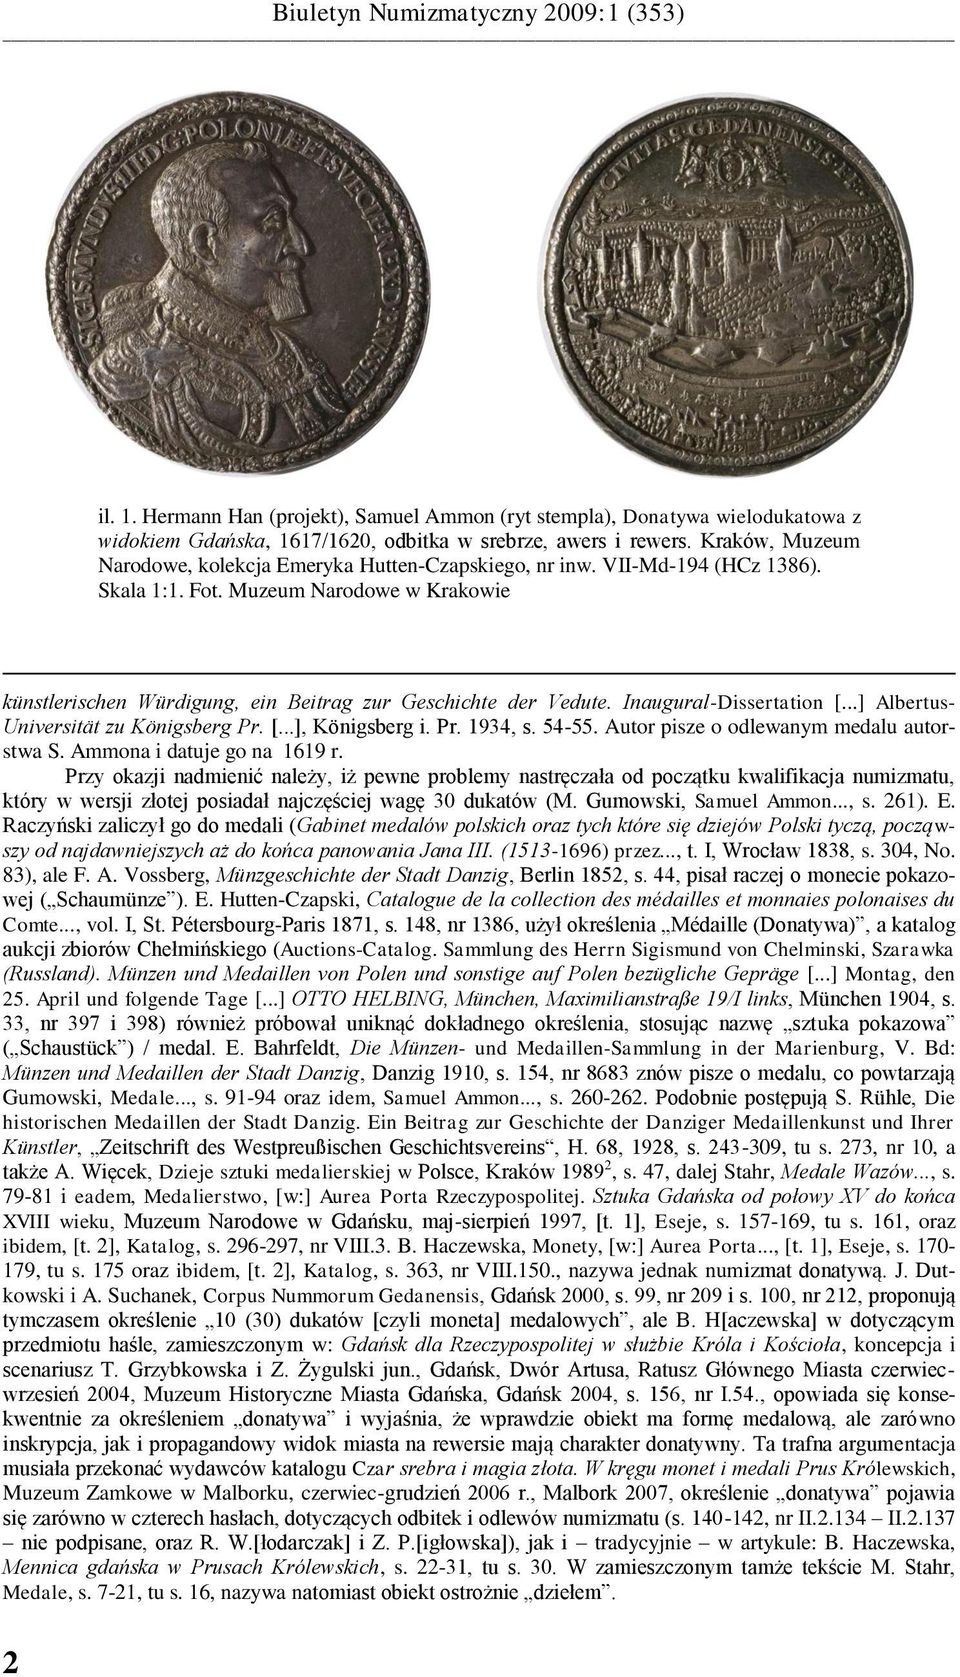 Inaugural-Dissertation [...] Albertus- Universität zu Königsberg Pr. [...], Königsberg i. Pr. 1934, s. 54-55. Autor pisze o odlewanym medalu autorstwa S. Ammona i datuje go na 1619 r.